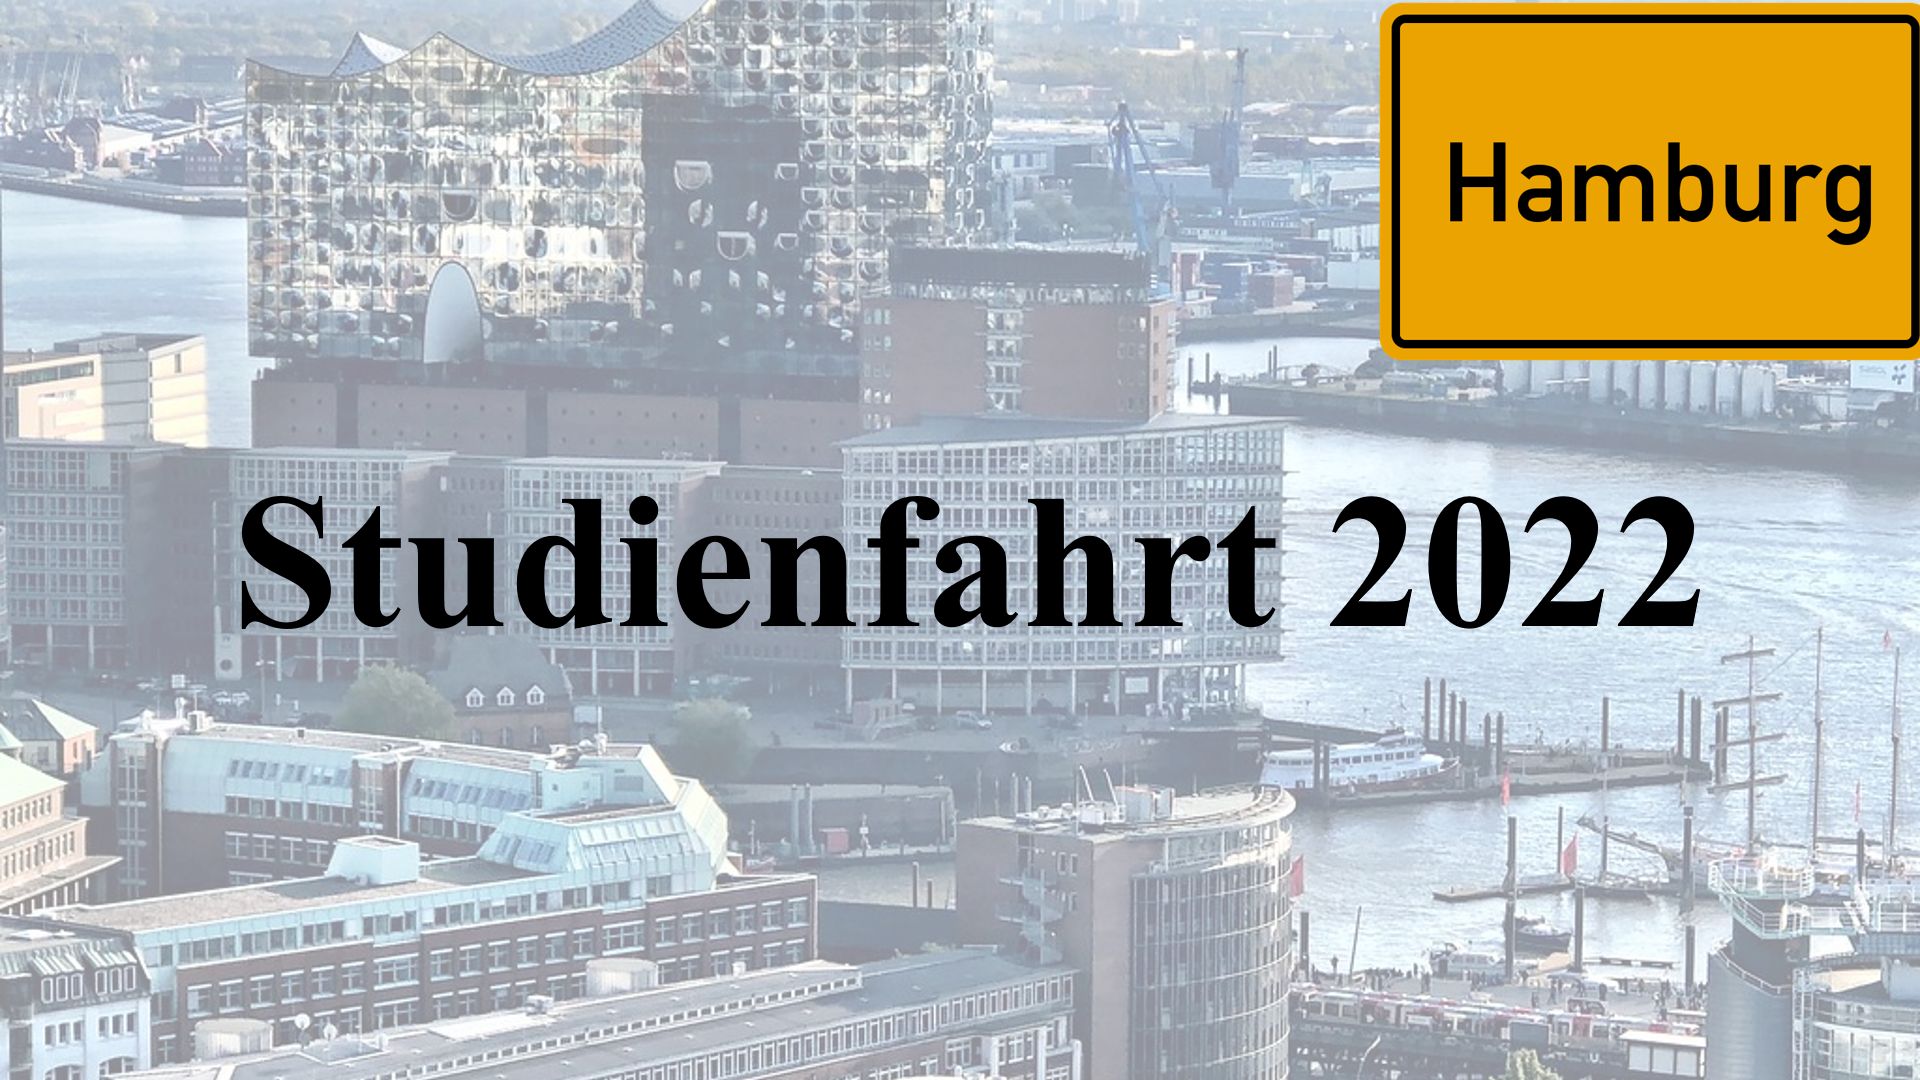 Studienfahrt 2022 - Hamburg